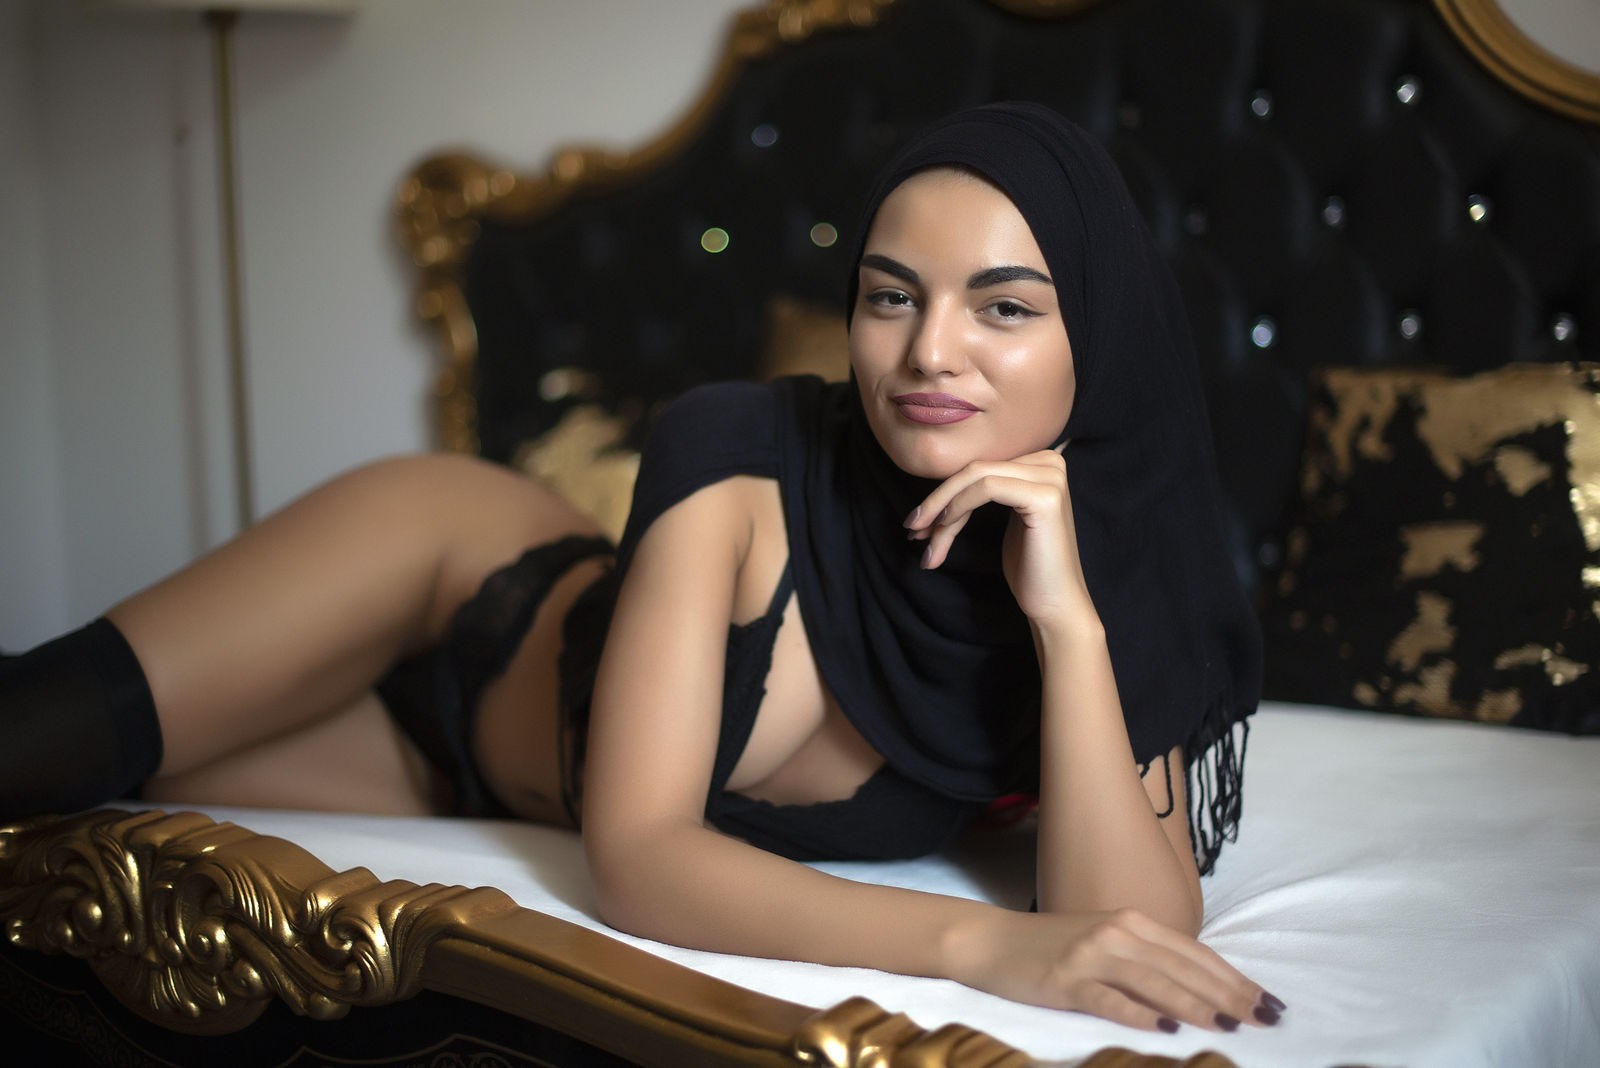 Arbi Woman Sex - Arab Women with Ample Bodices 18 (67 photos) - sex eporner pics